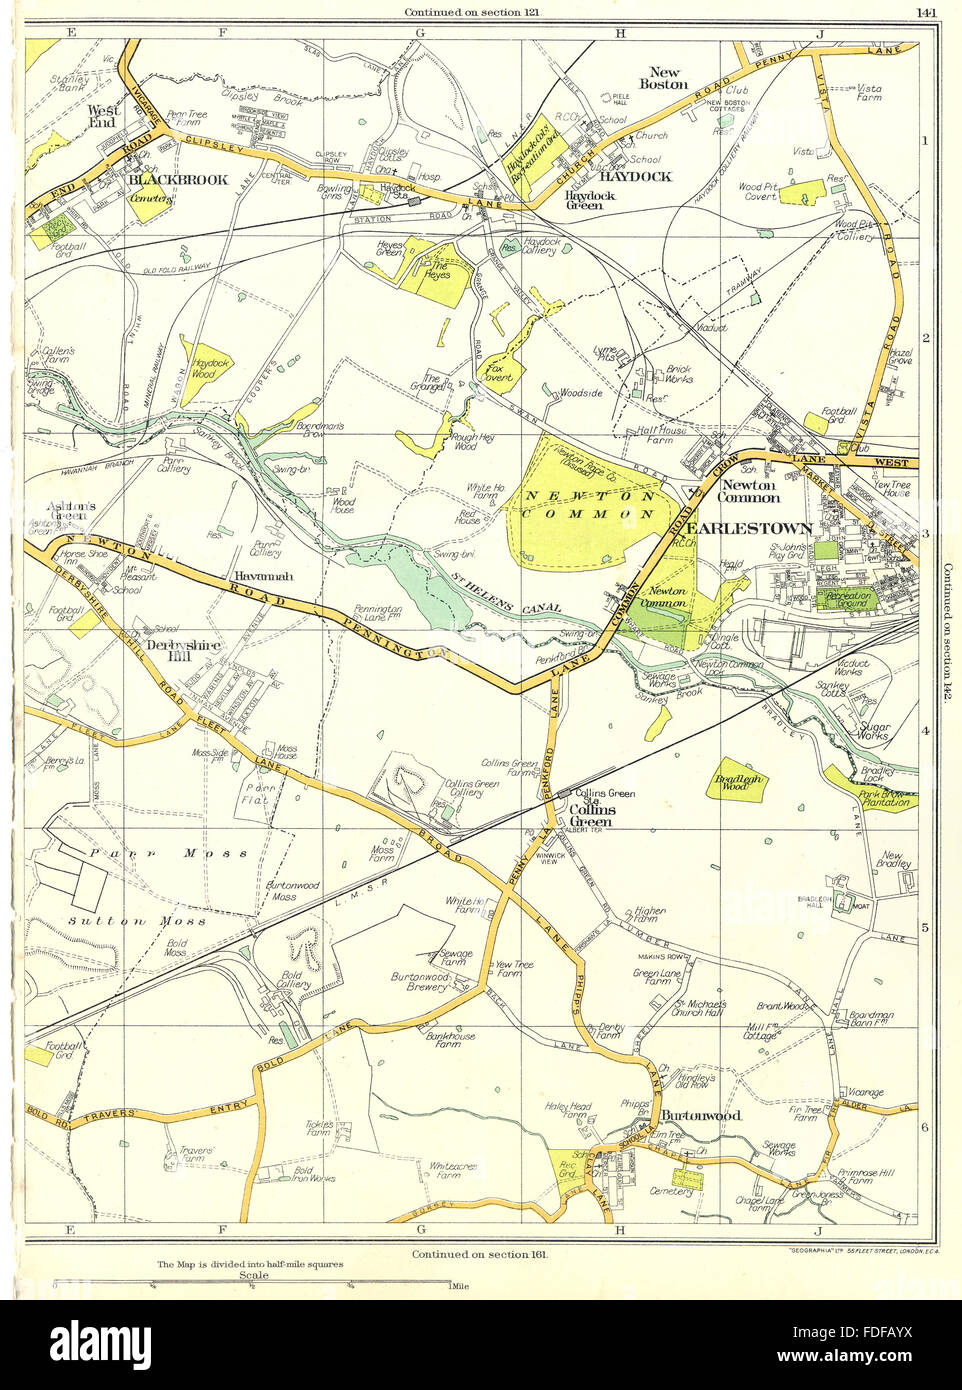 LANCS Derbyshire Hill Green Burtonwood Earlestown Haydock Blackbrook 1935 map Stock Photo